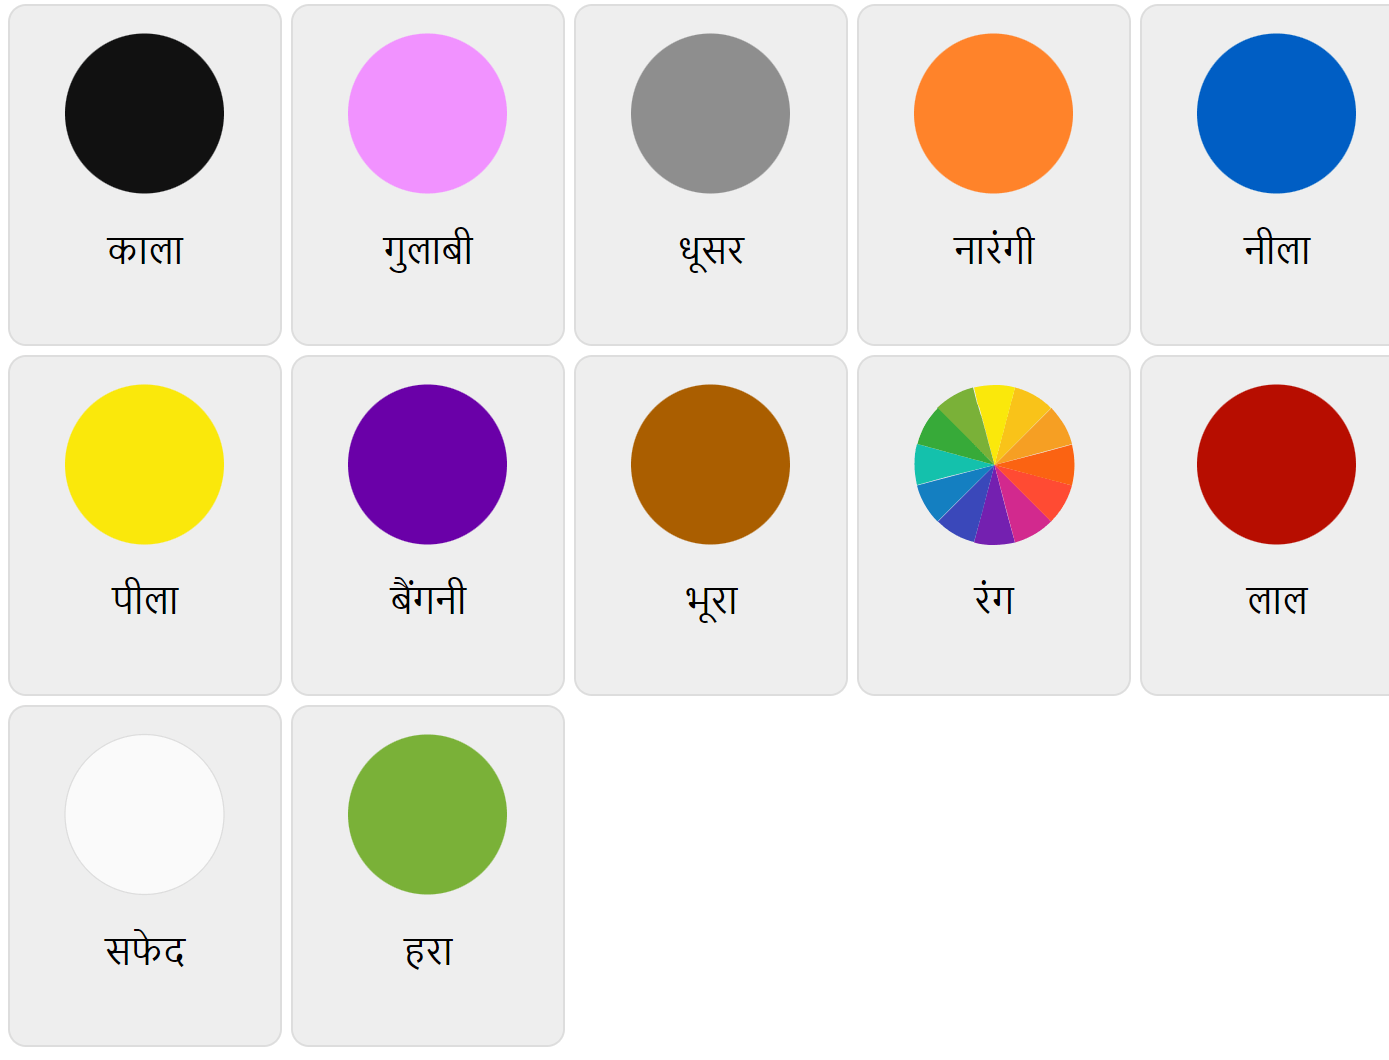 Цвета на языке хинди